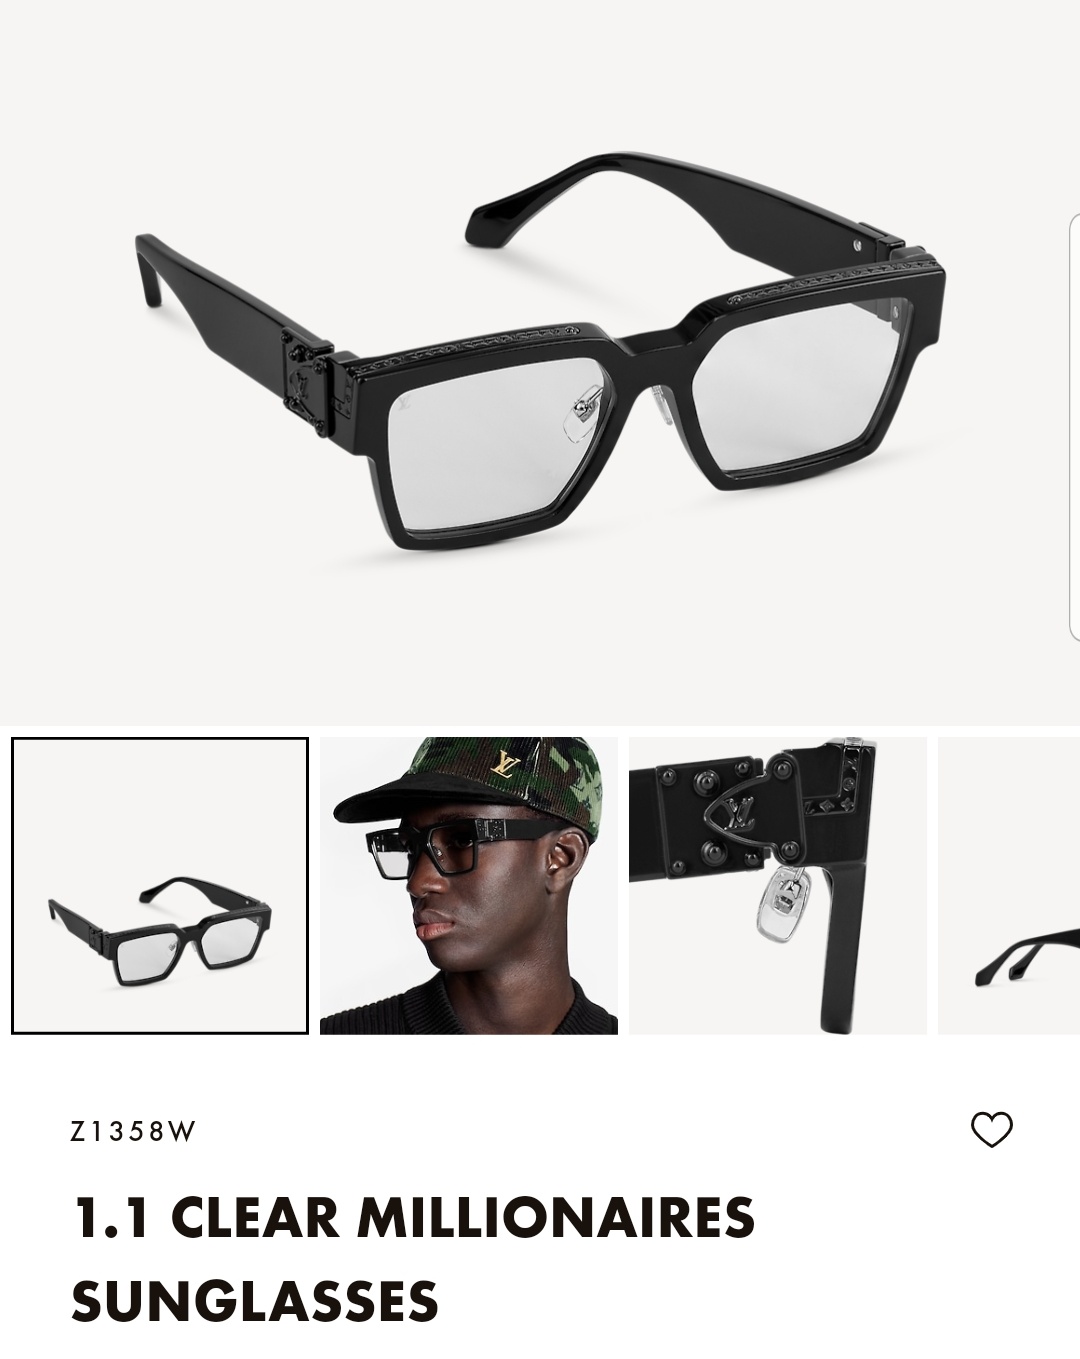 1.1 clear millionaires